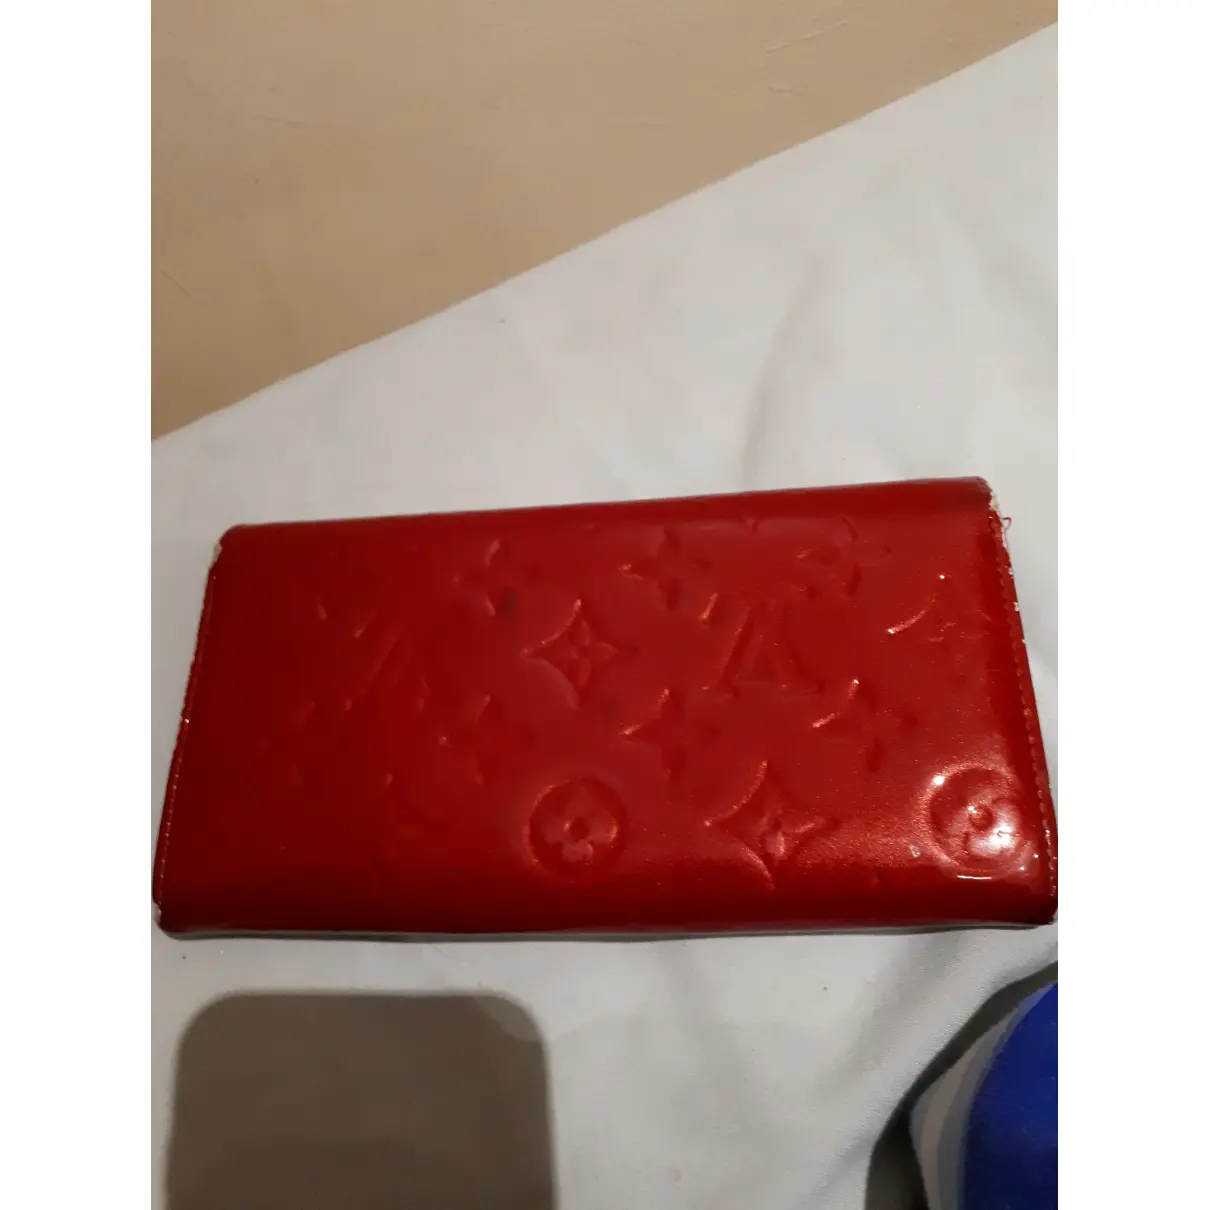 Buy Louis Vuitton Virtuose patent leather wallet online